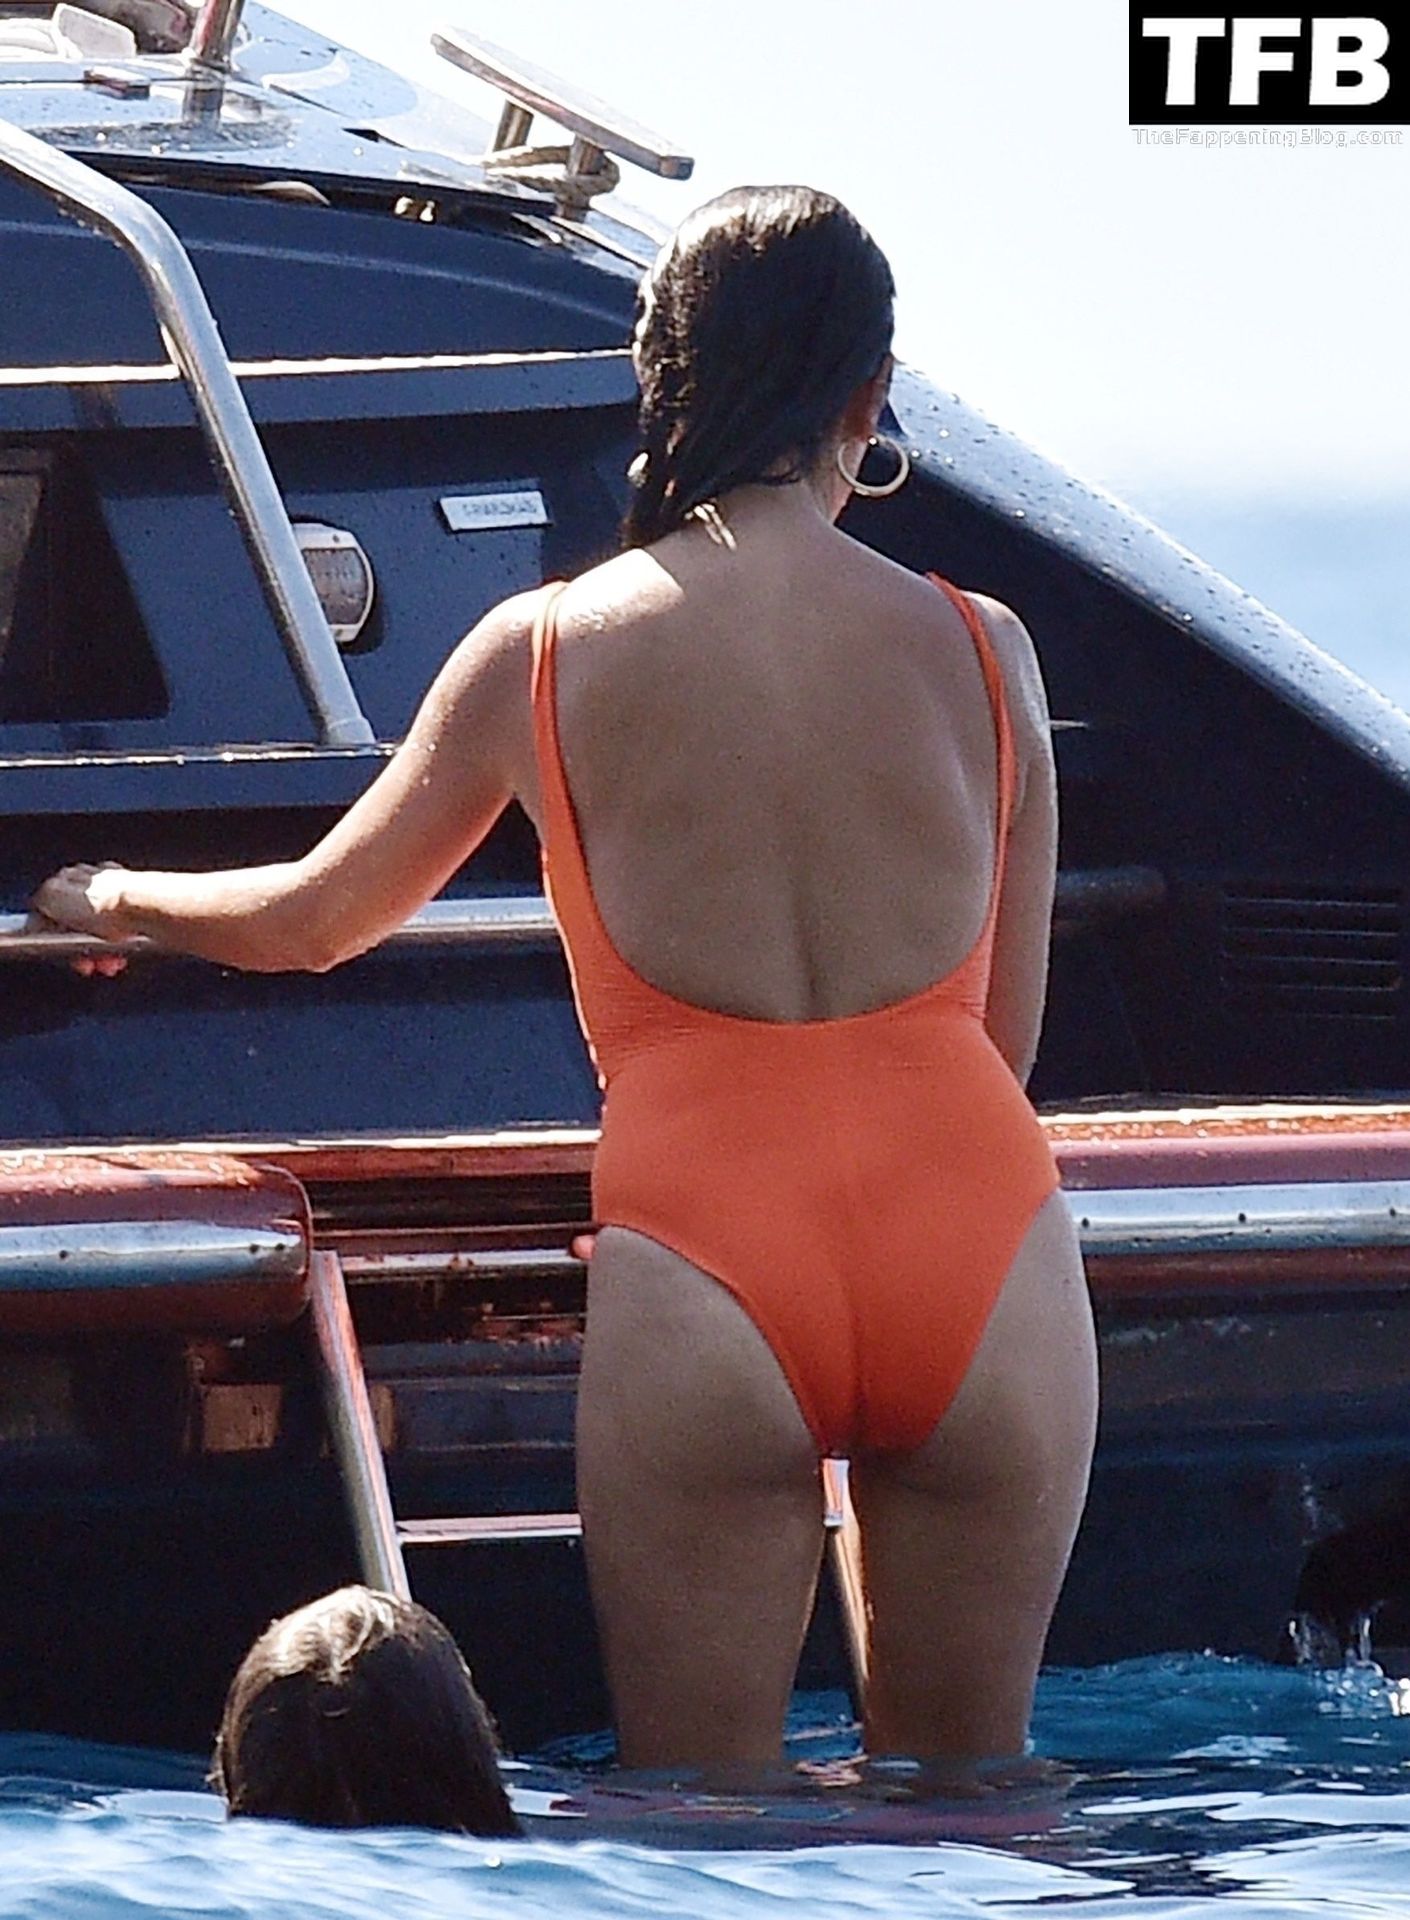 Spanish actress Penelope Cruz wearing a bright orange bikini enjoys a day a...